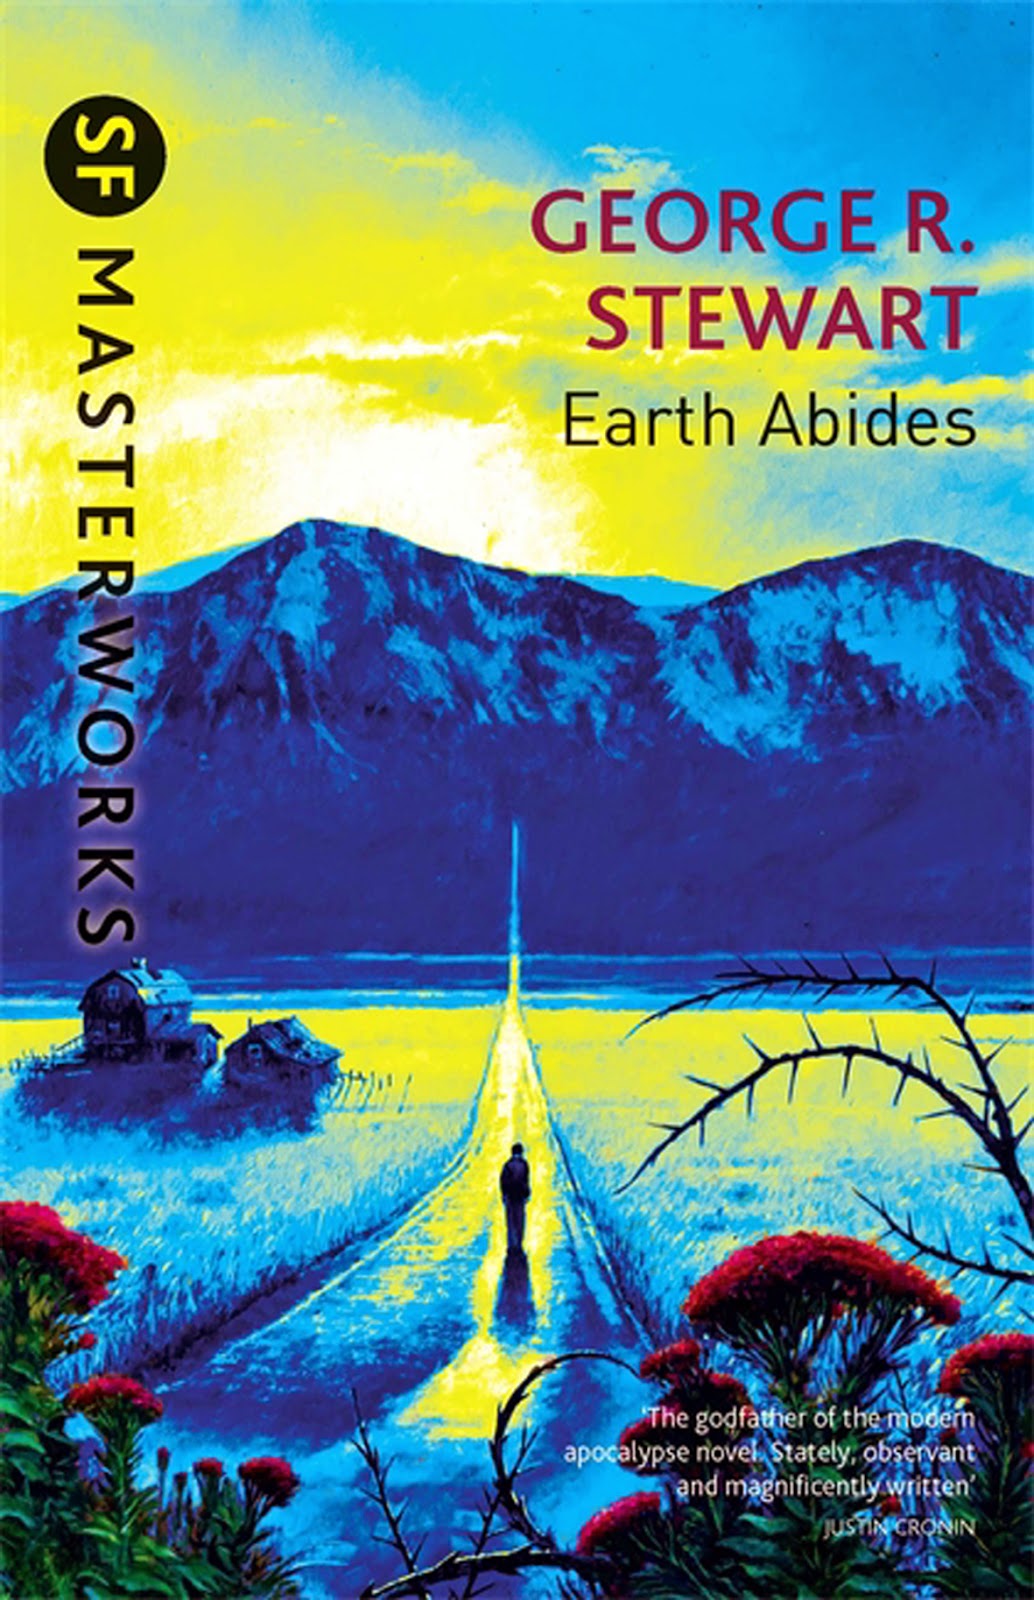 George R. Stewart: Earth Abides (1999, Gollancz)